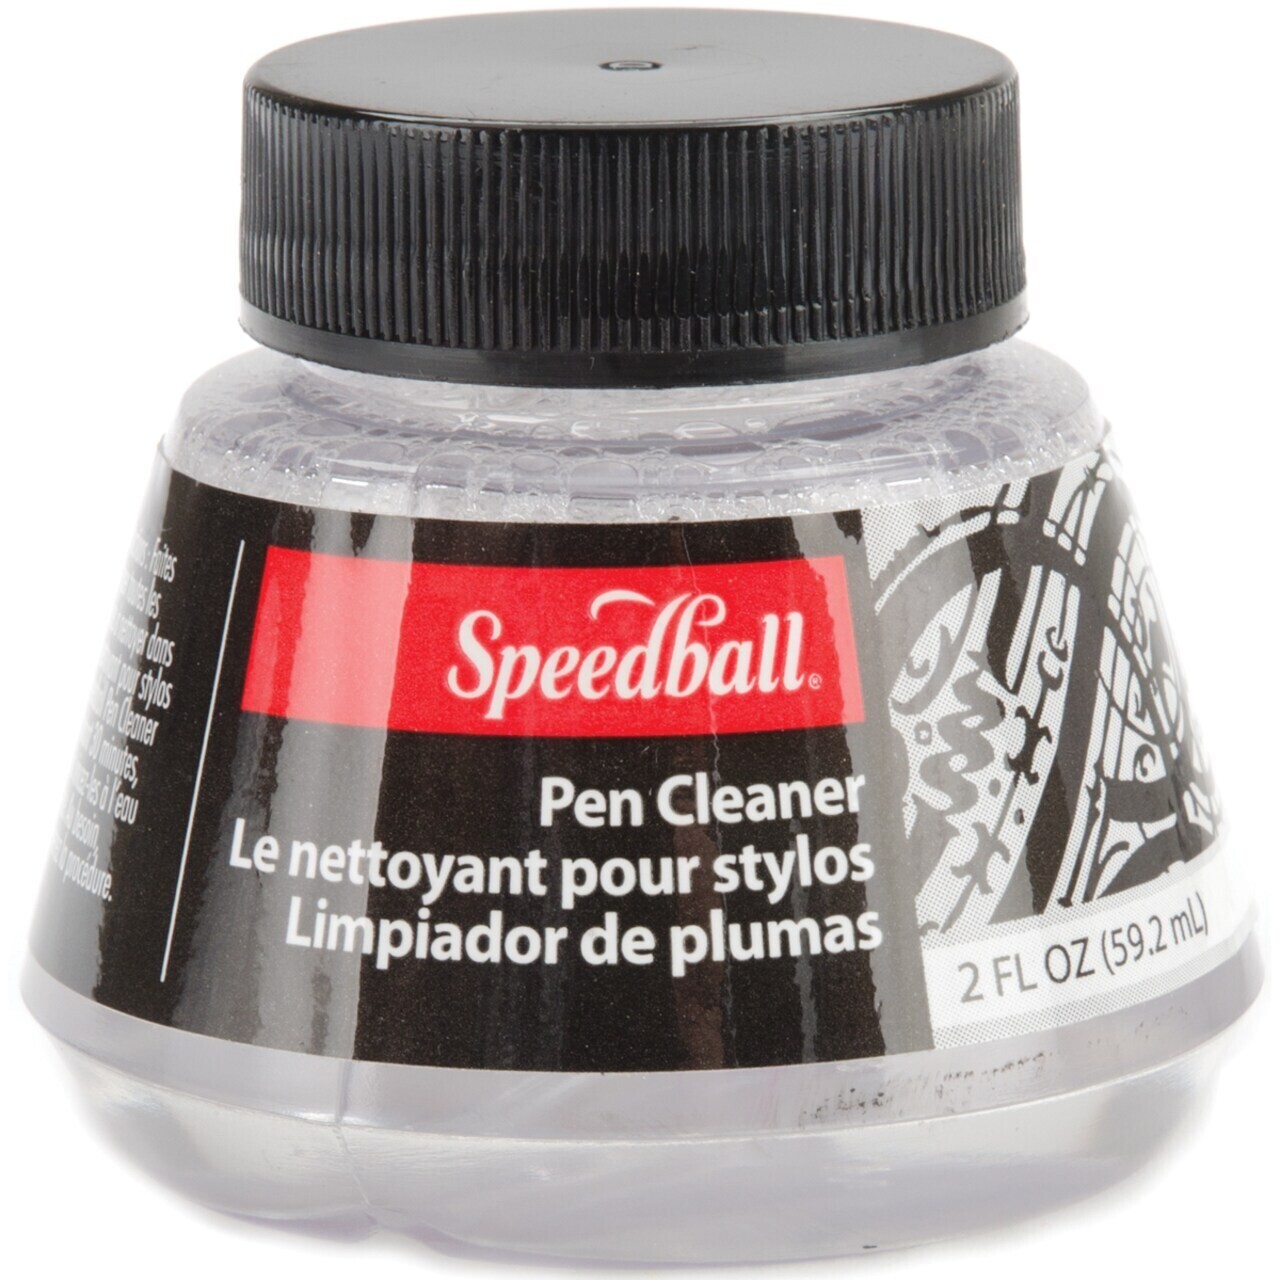 Speedball Pen Cleaner, 2 fl oz